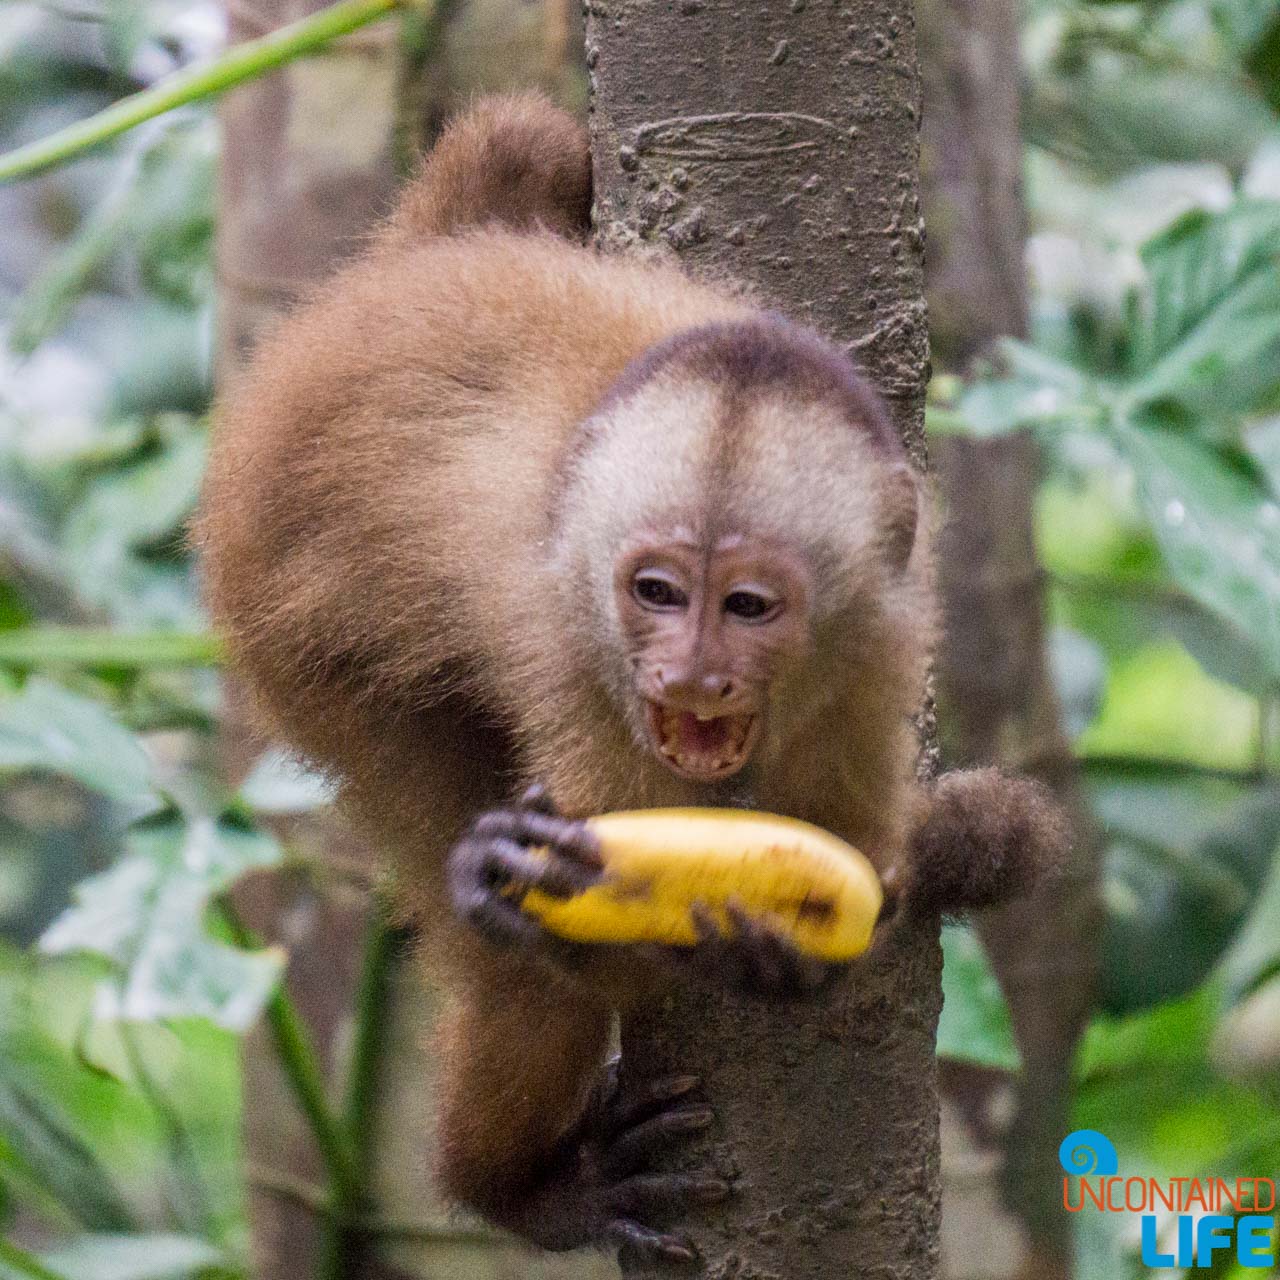 Monkey, Visit to the Peruvian Amazon, Puerto Maldonado, Peru, Uncontained Life